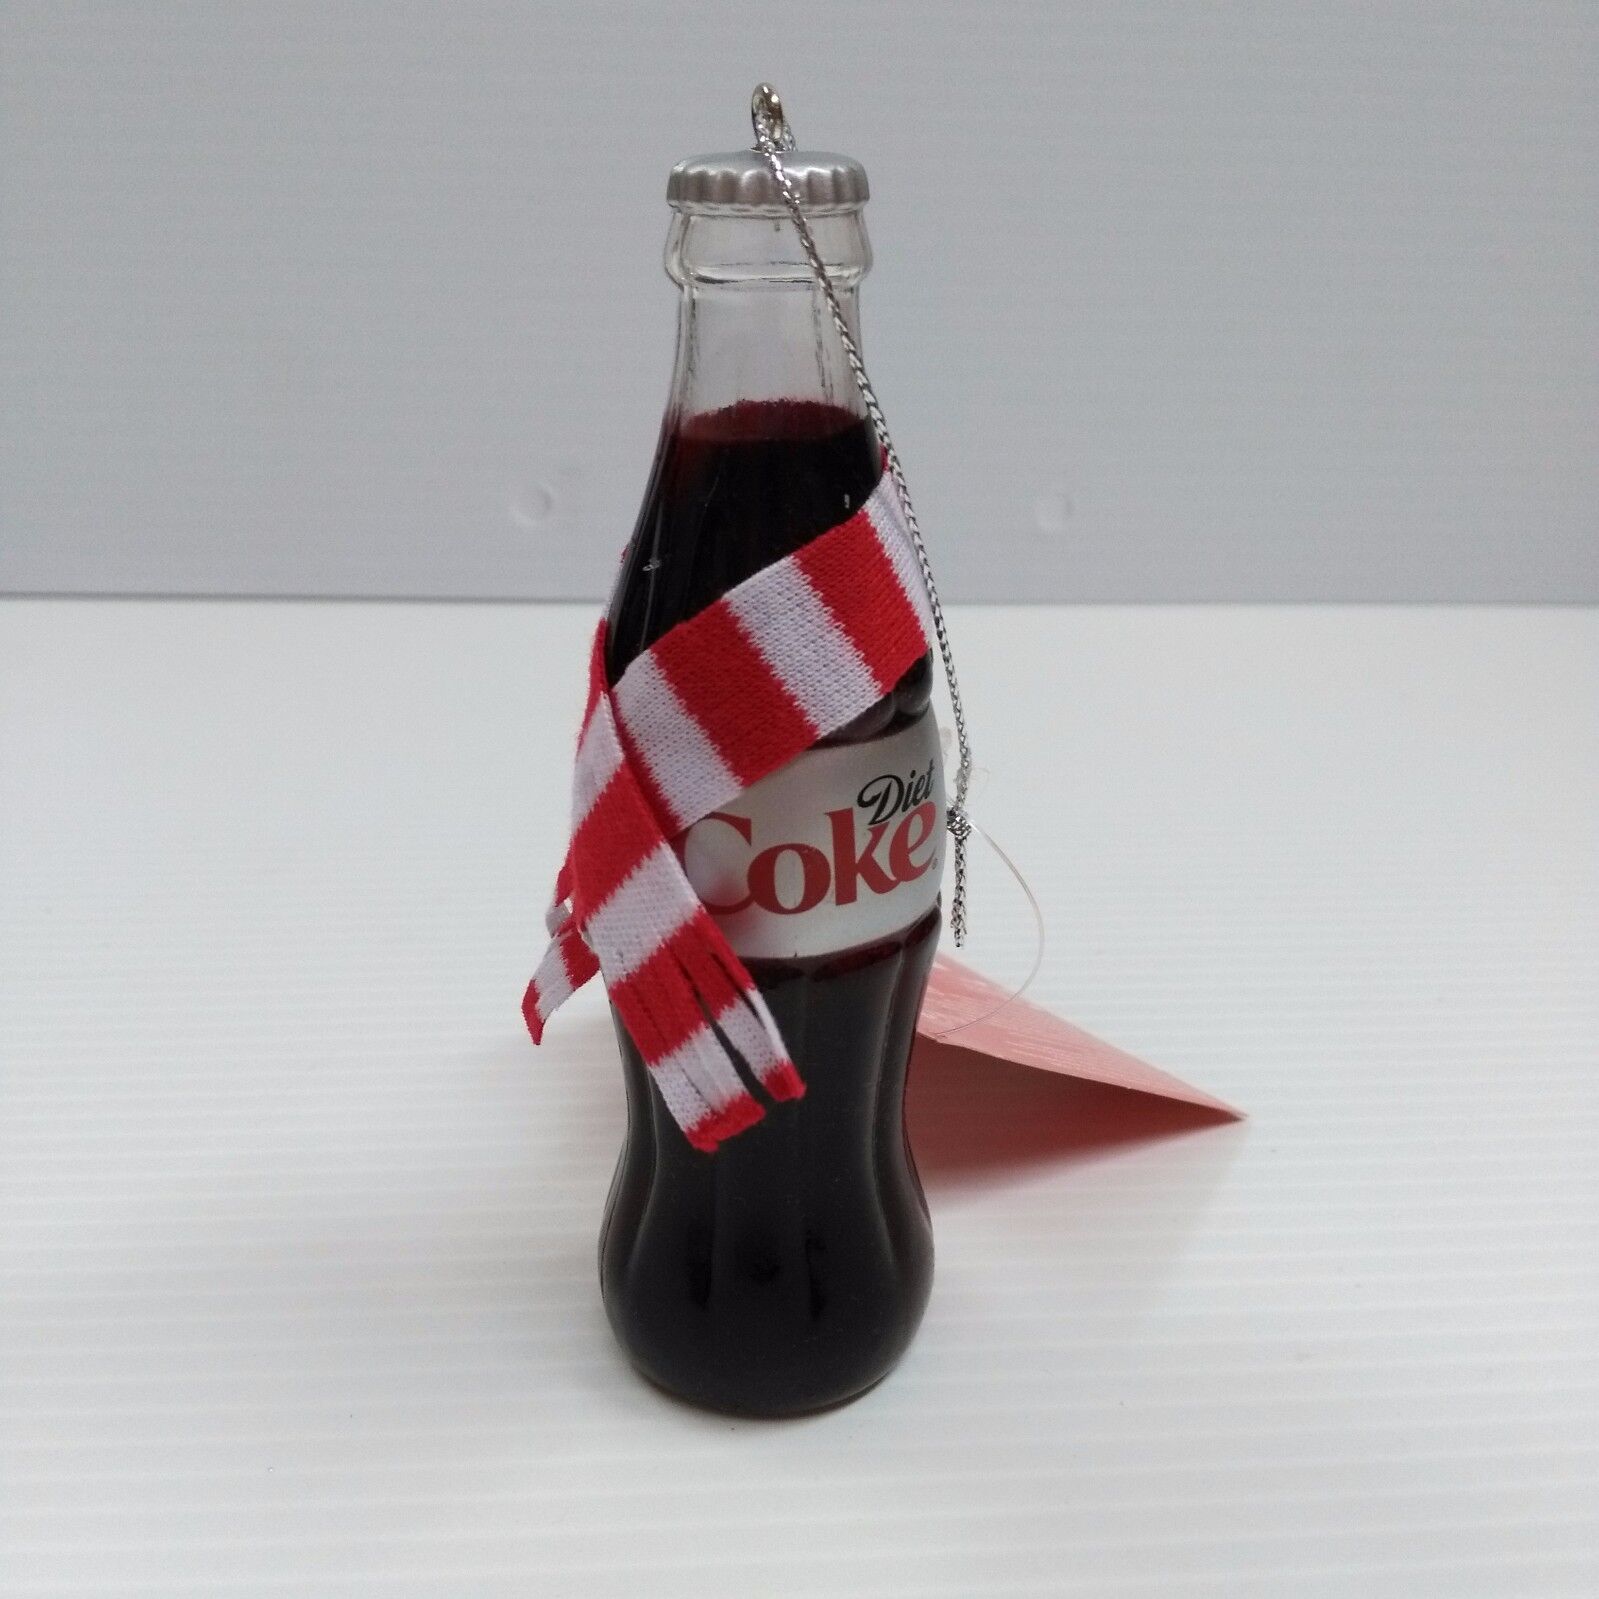 Diet Coke Ornament Bottle w/ Scarf - OFFICIAL PRODUCT